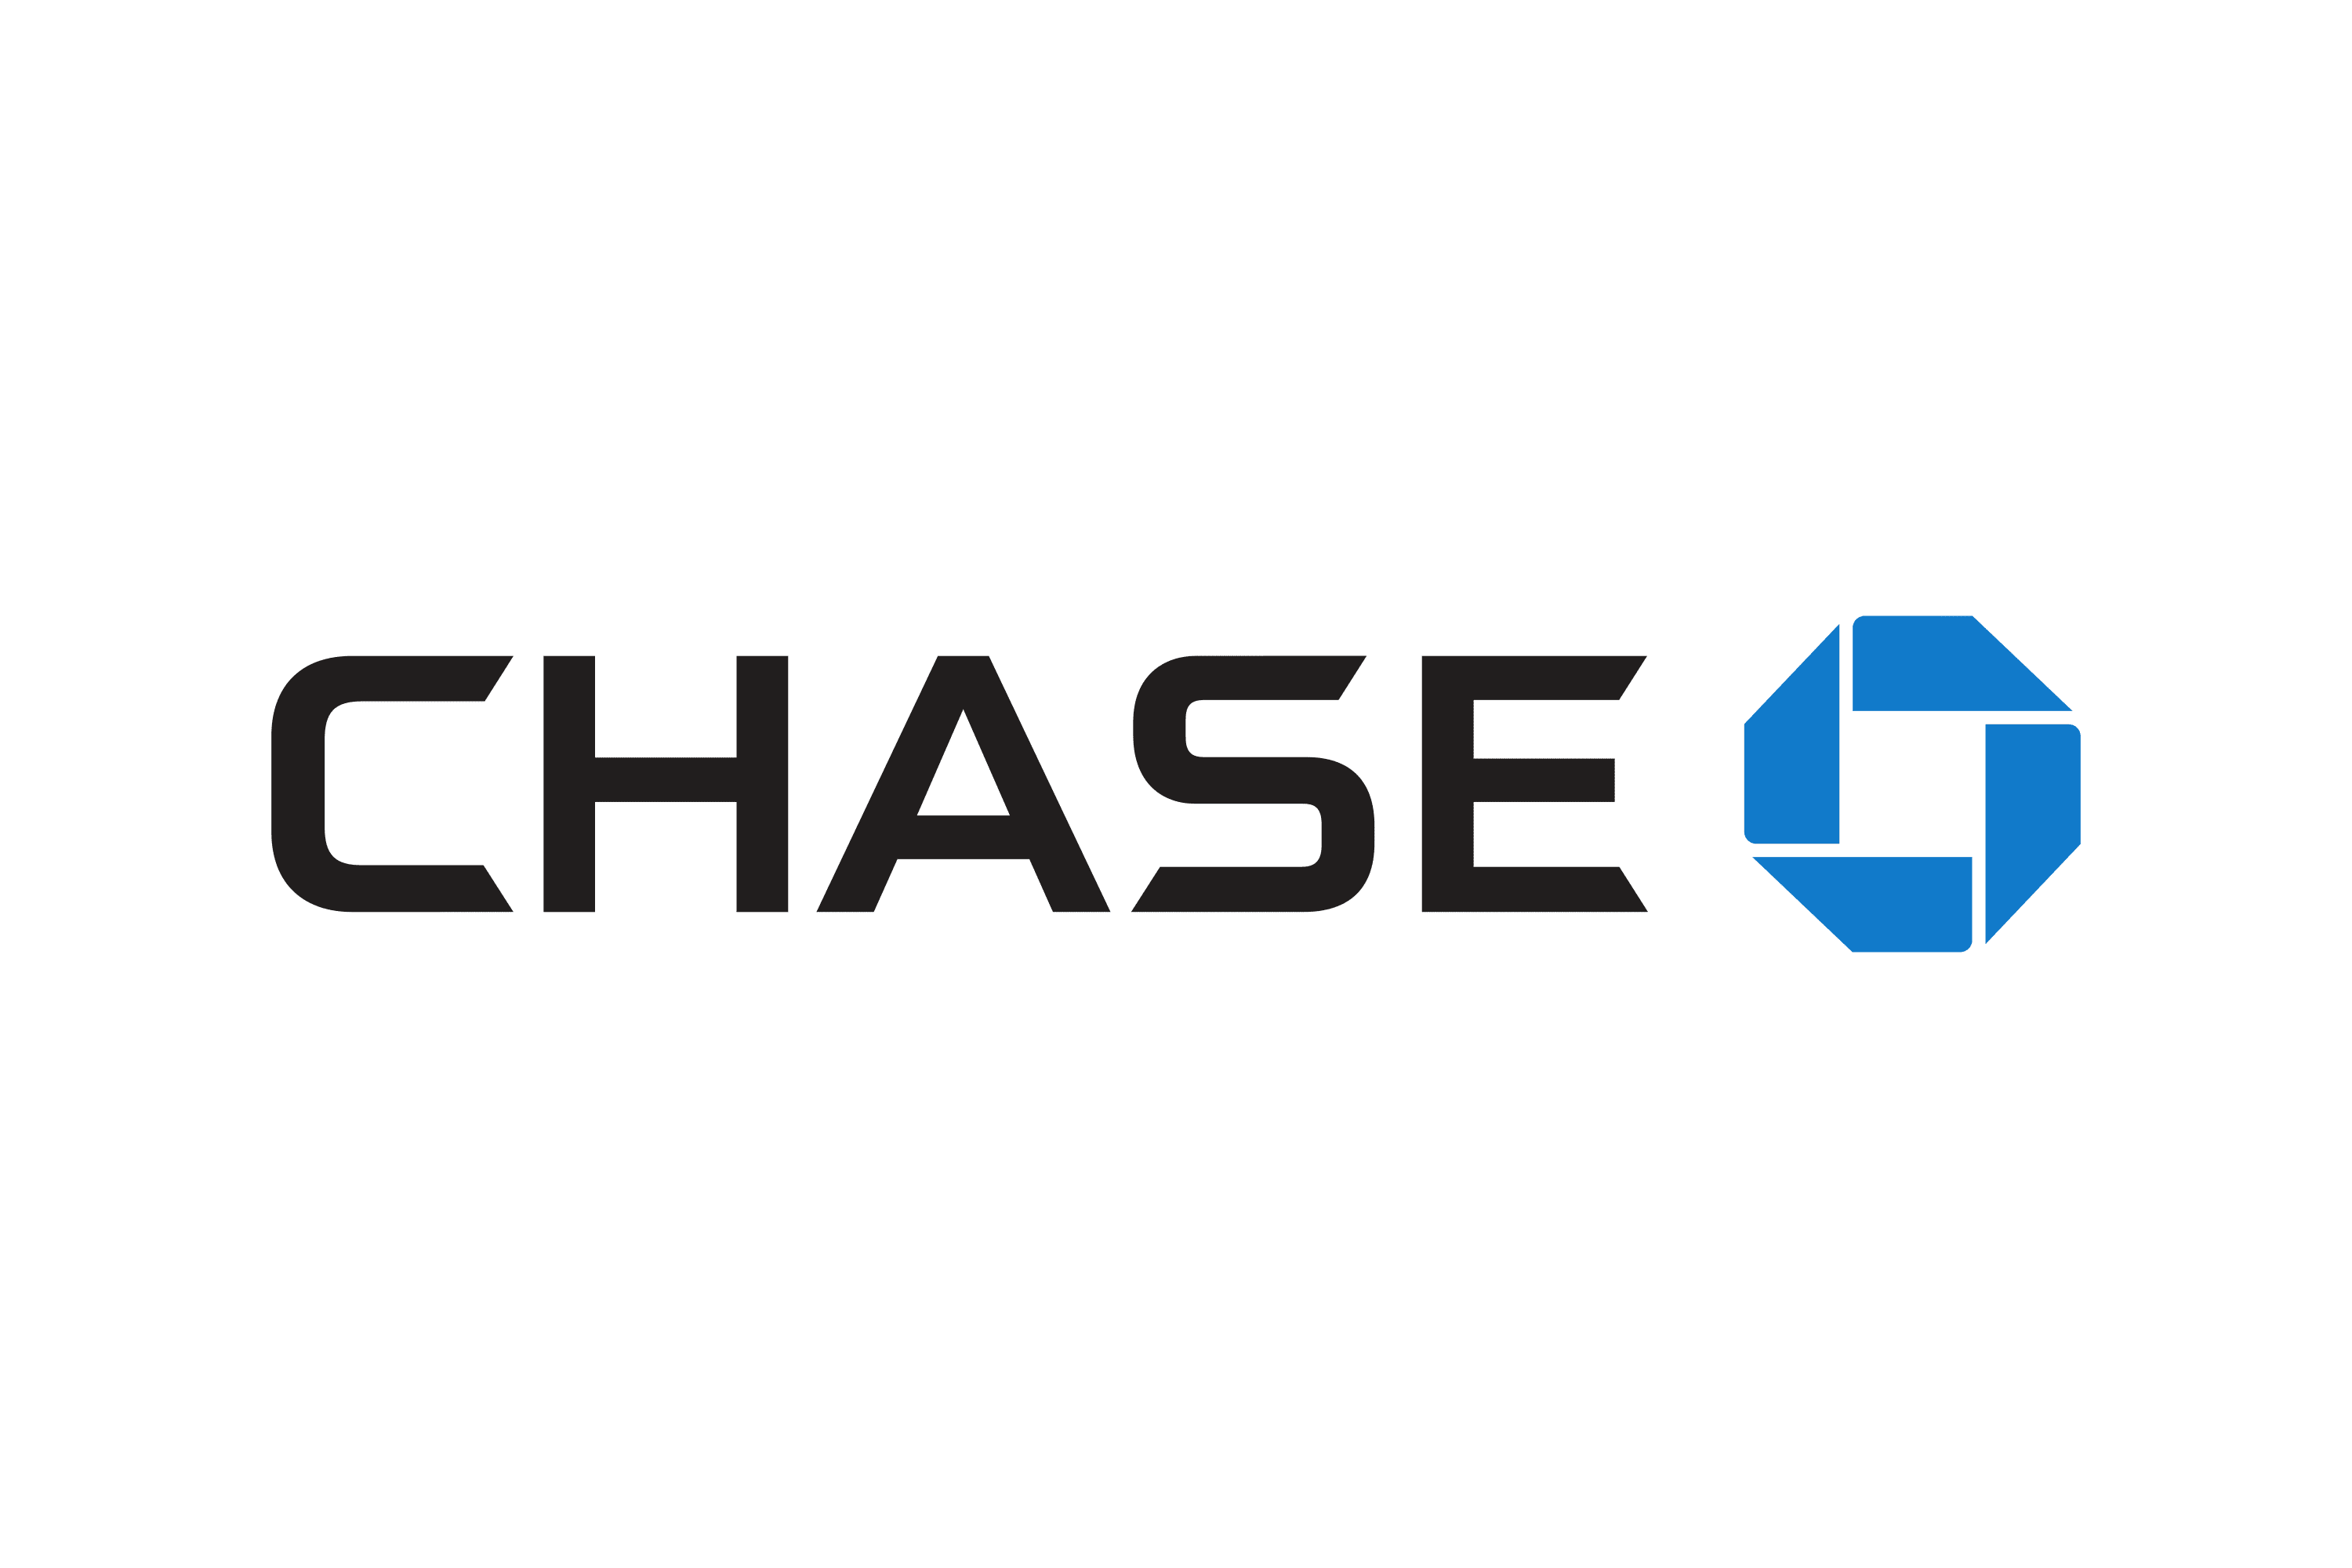 Chase_Bank-Logo.wine